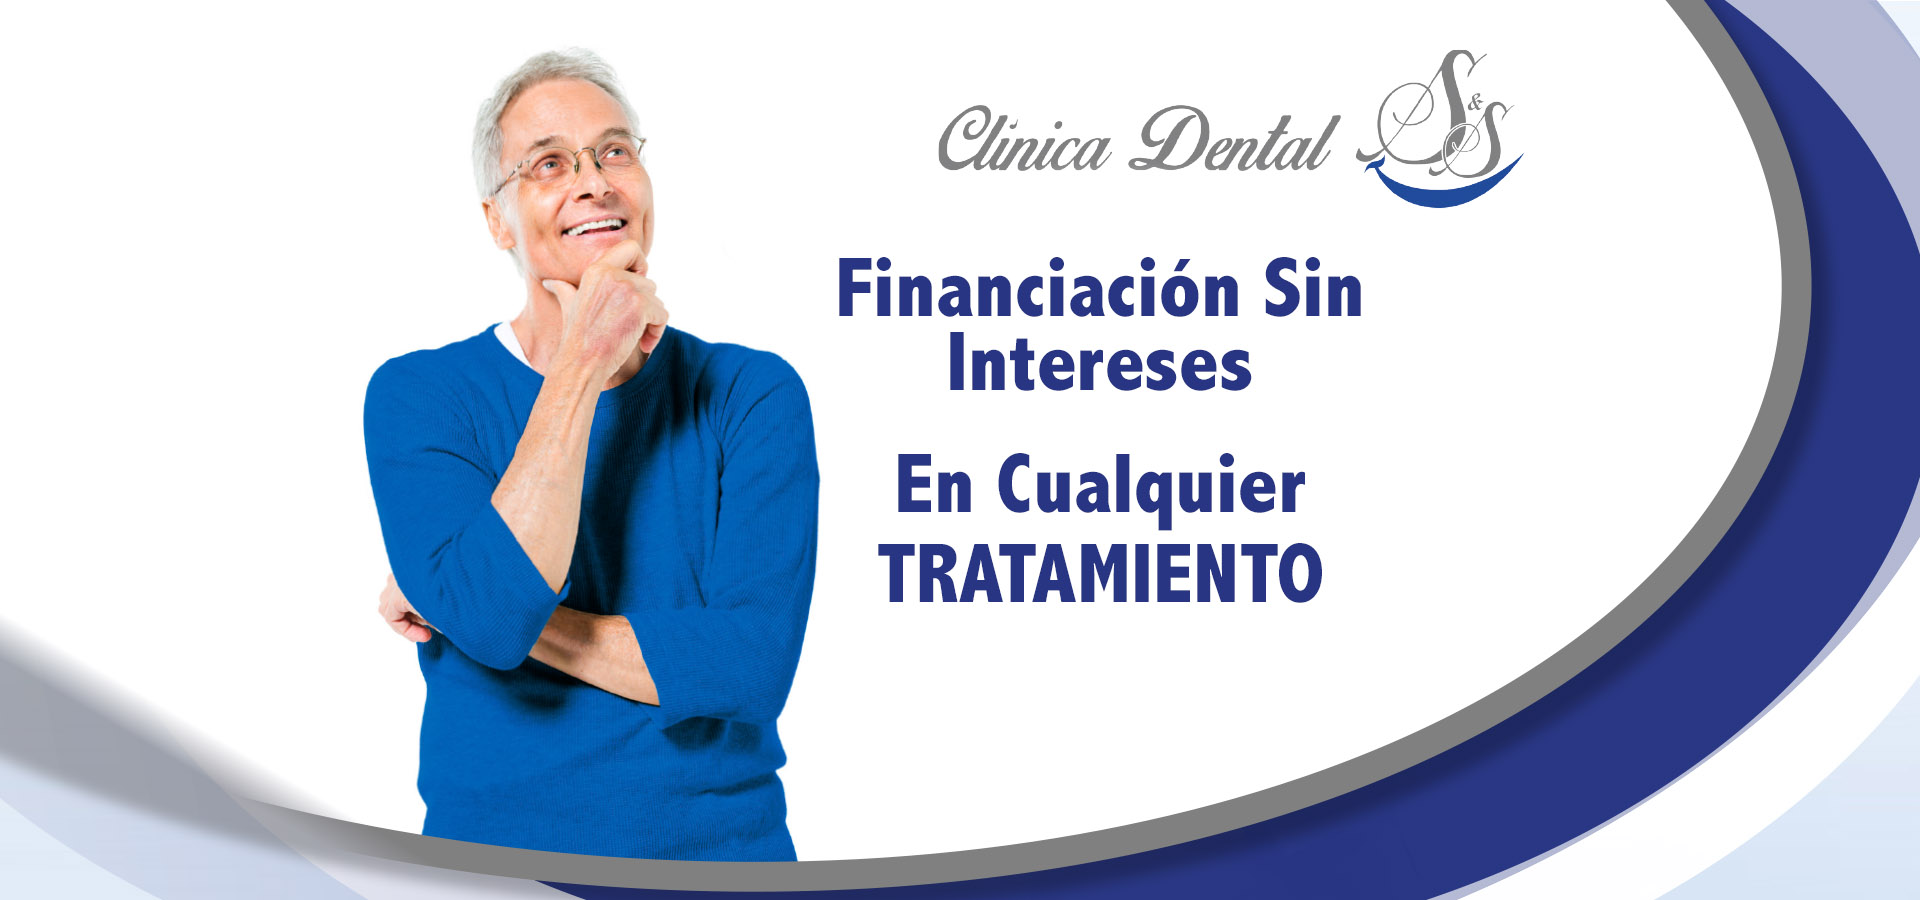 Financiación Sin Intereses en Clínica Dental SyS